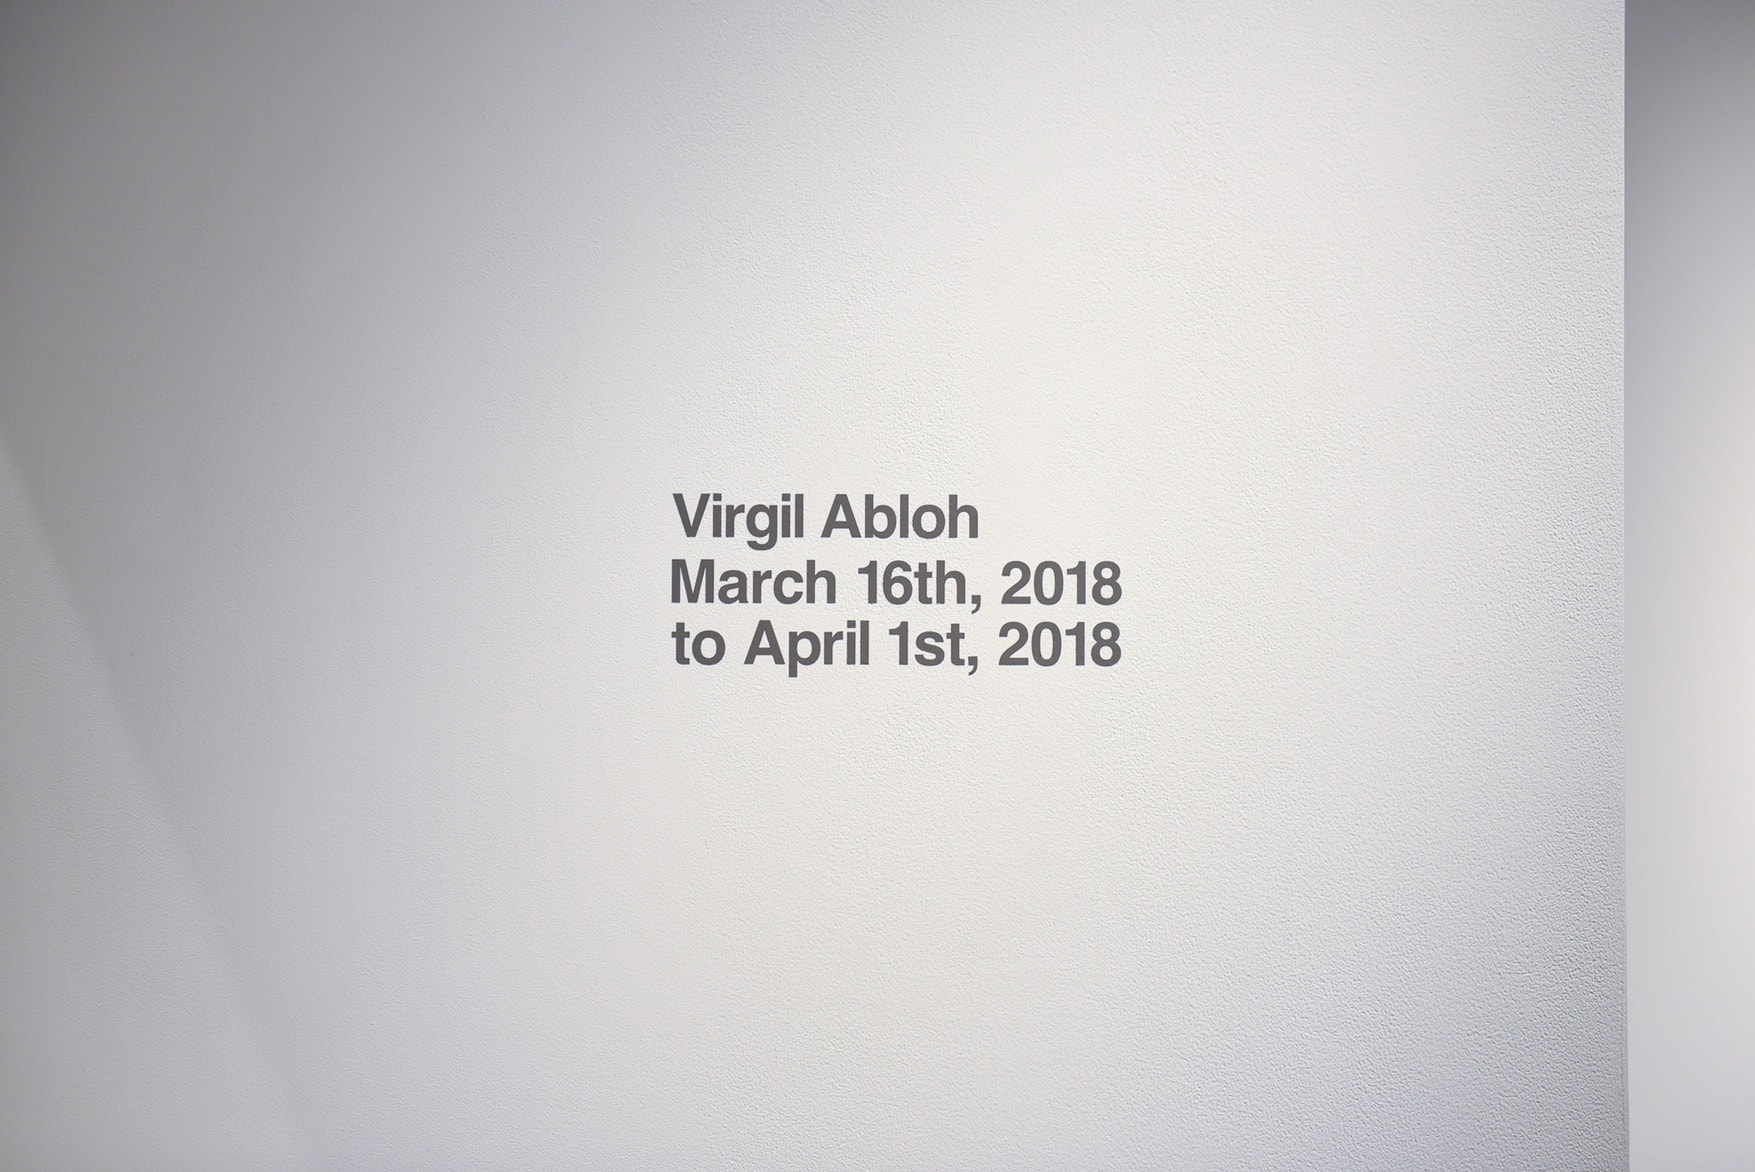 Virgil Abloh PAY PER VIEW Exhibit Kaikai Kiki Gallery Tokyo